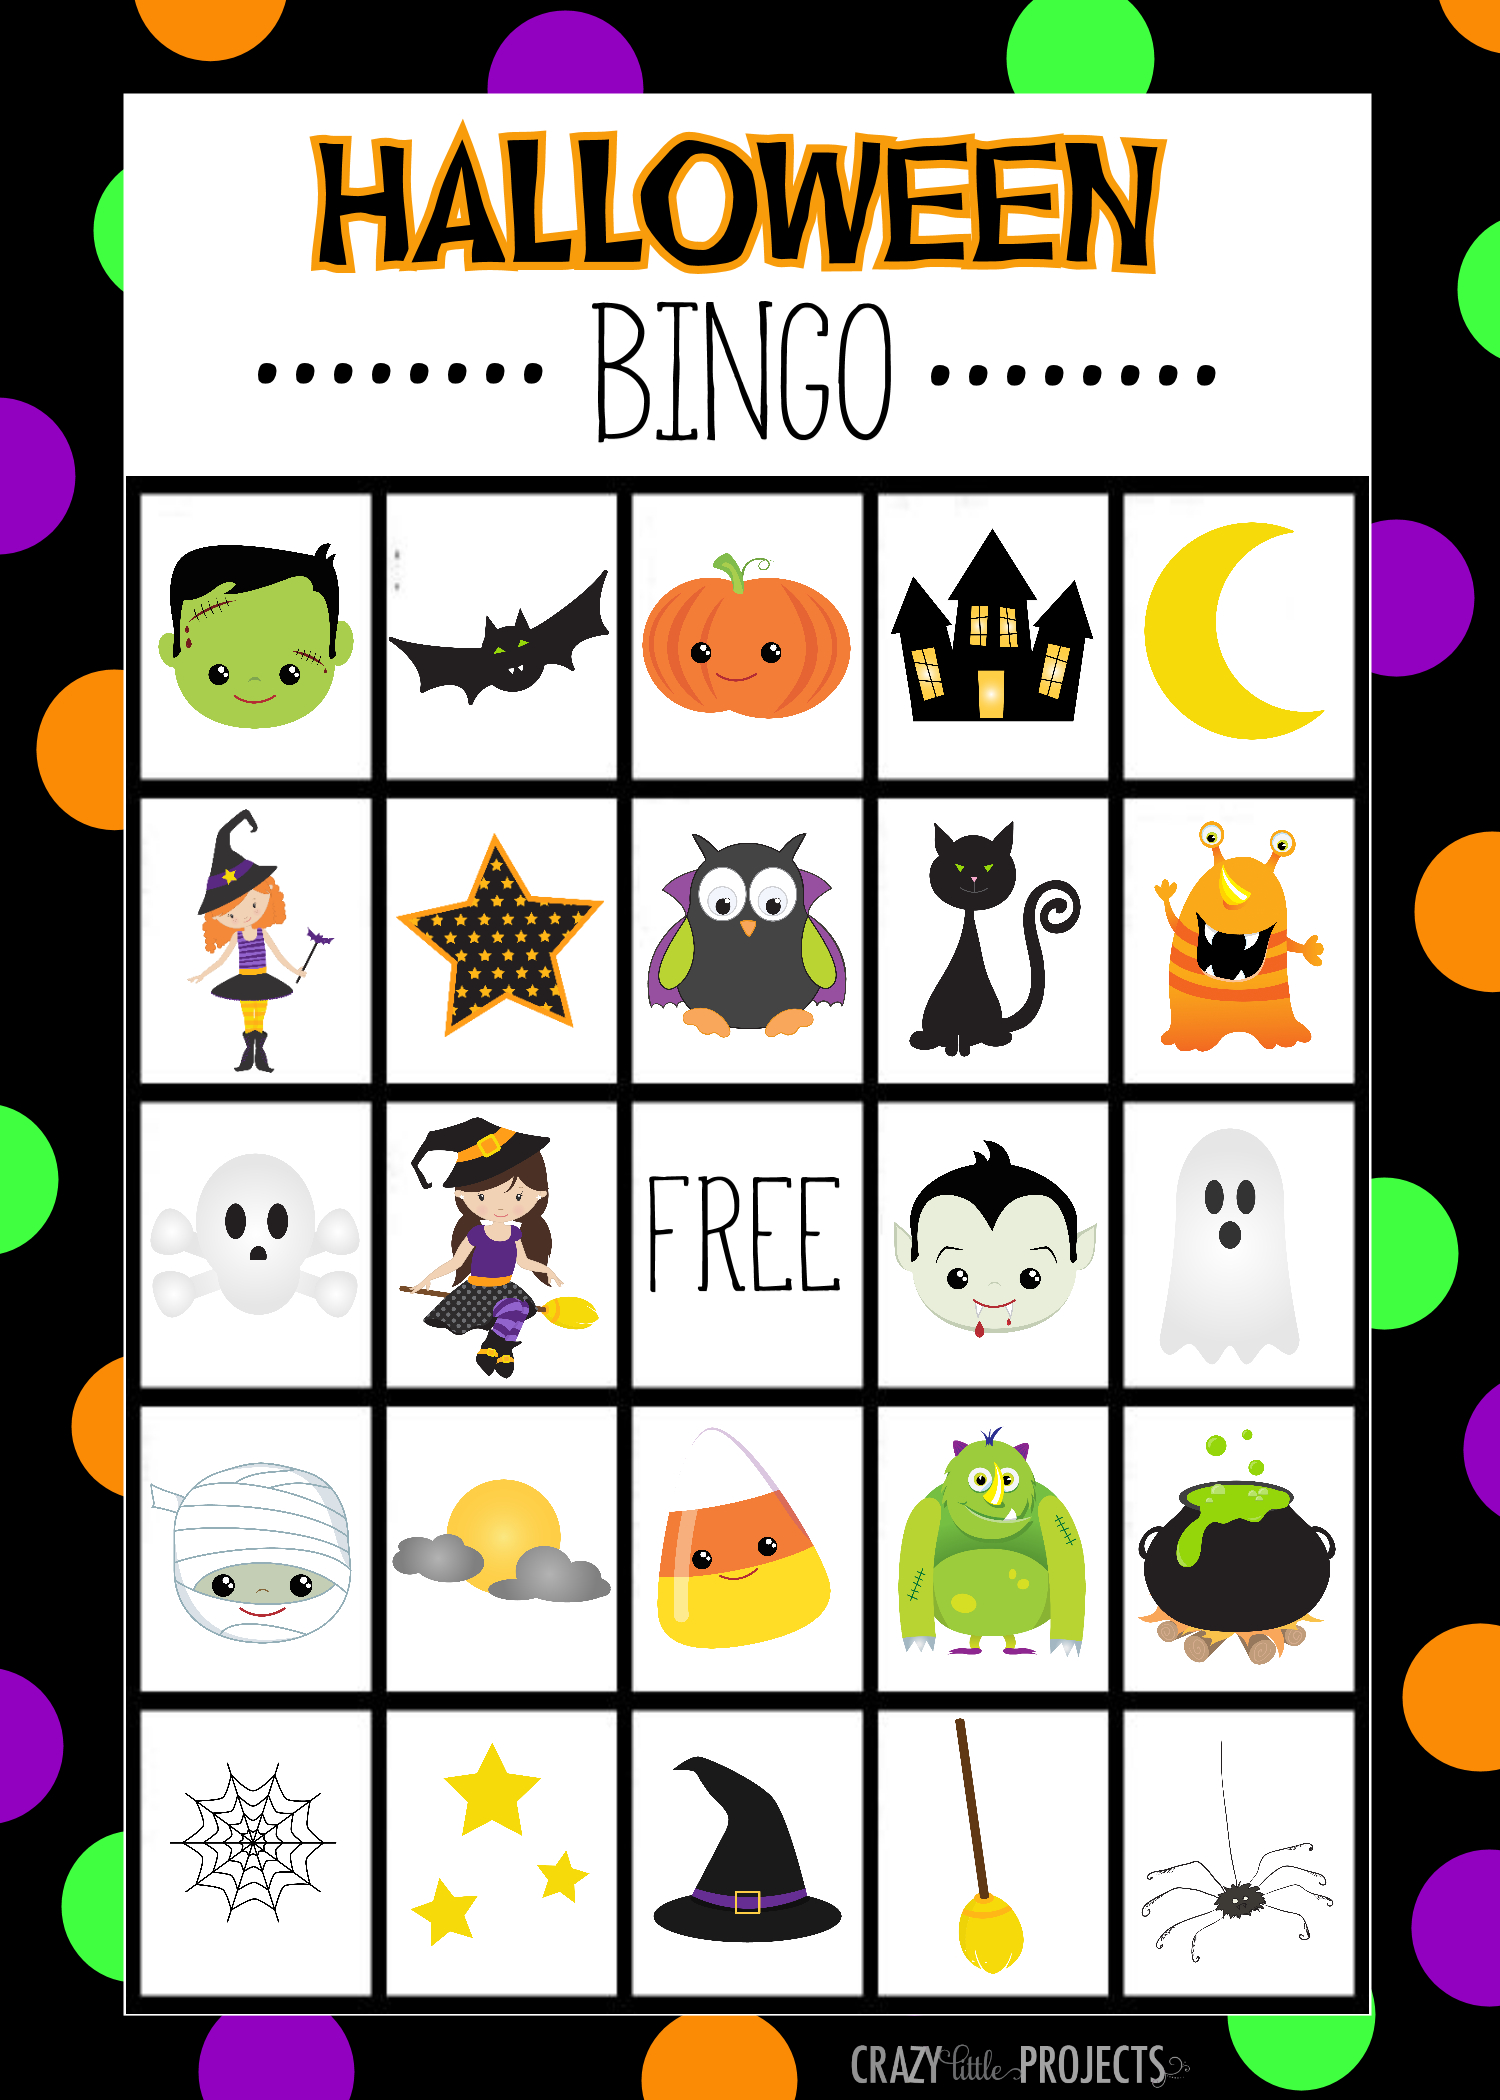 Halloween Bingo - Cute Free Printable Game | Halloween | Pinterest - Free Printable Halloween Bingo Cards